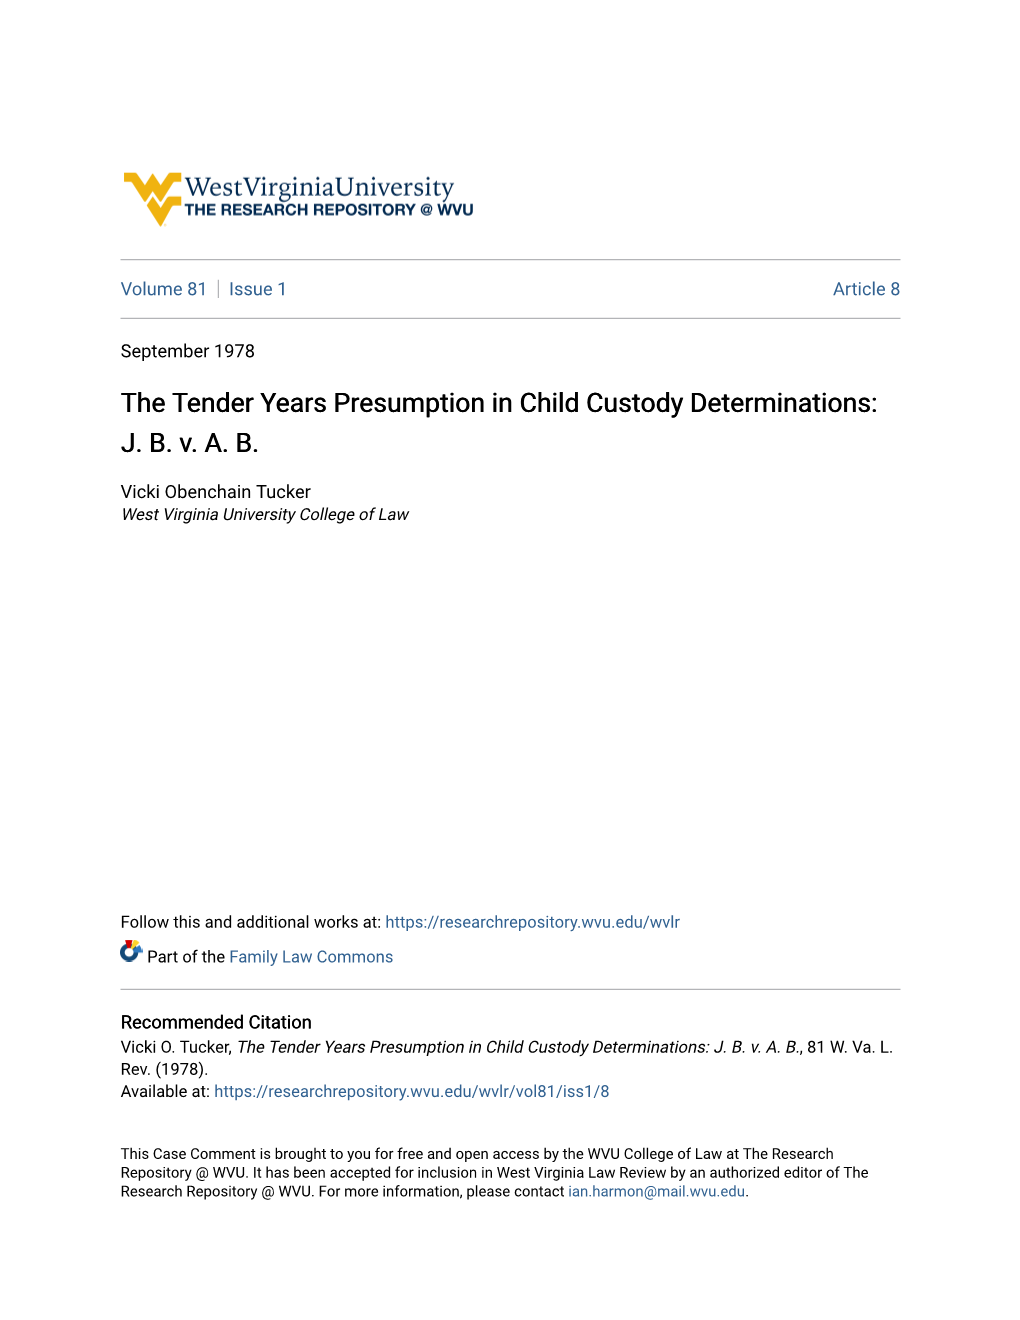 The Tender Years Presumption in Child Custody Determinations: J